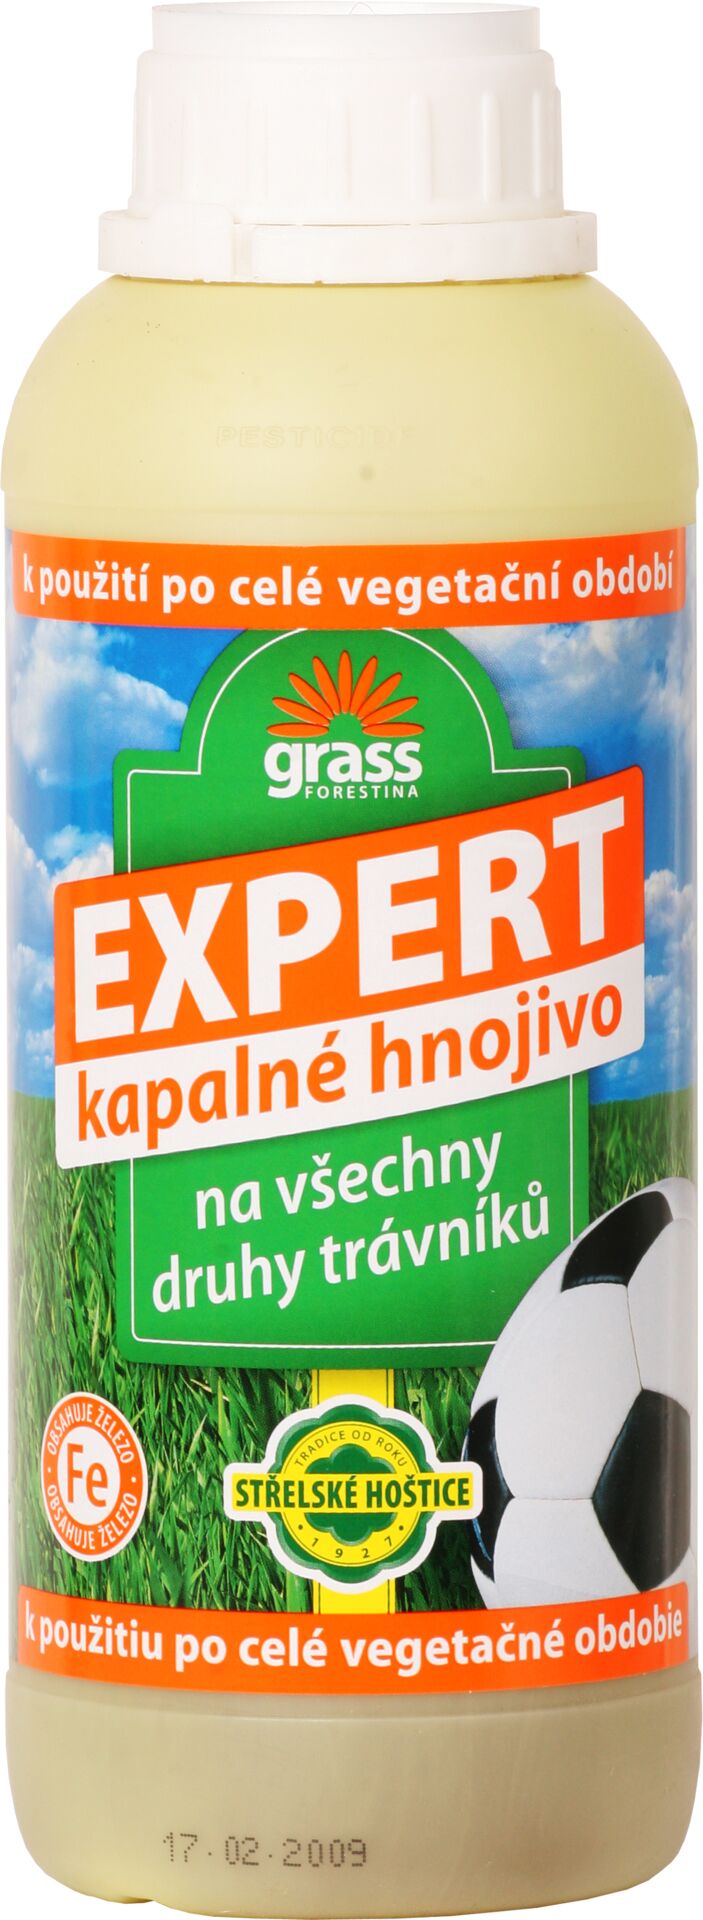 Hnojivo trávníkové Expert - tekutý 1 l